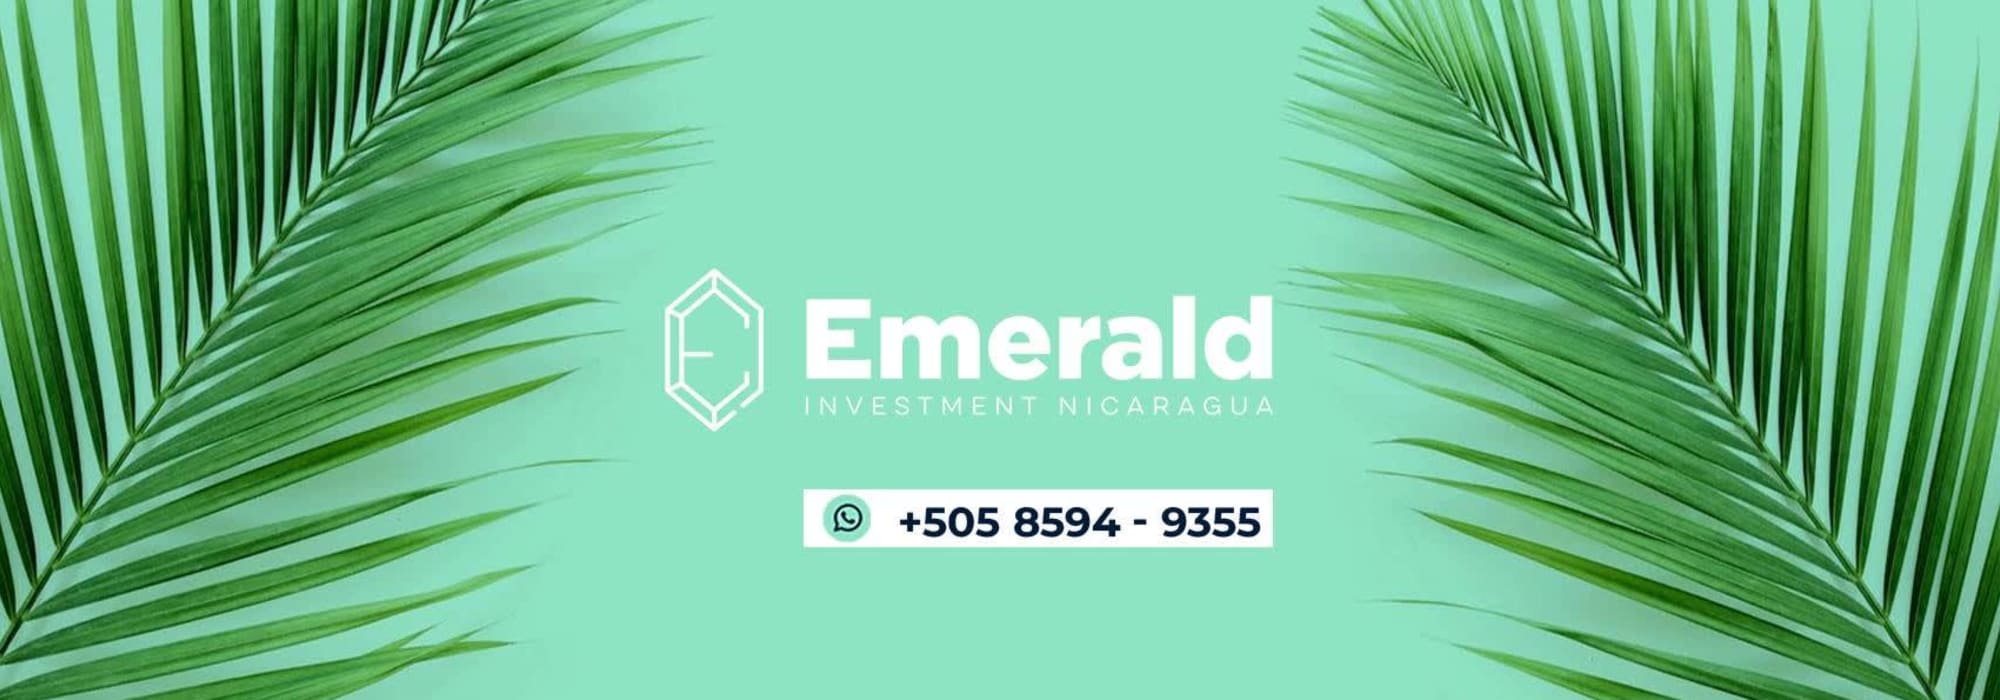 Emerald Investment Nicaragua